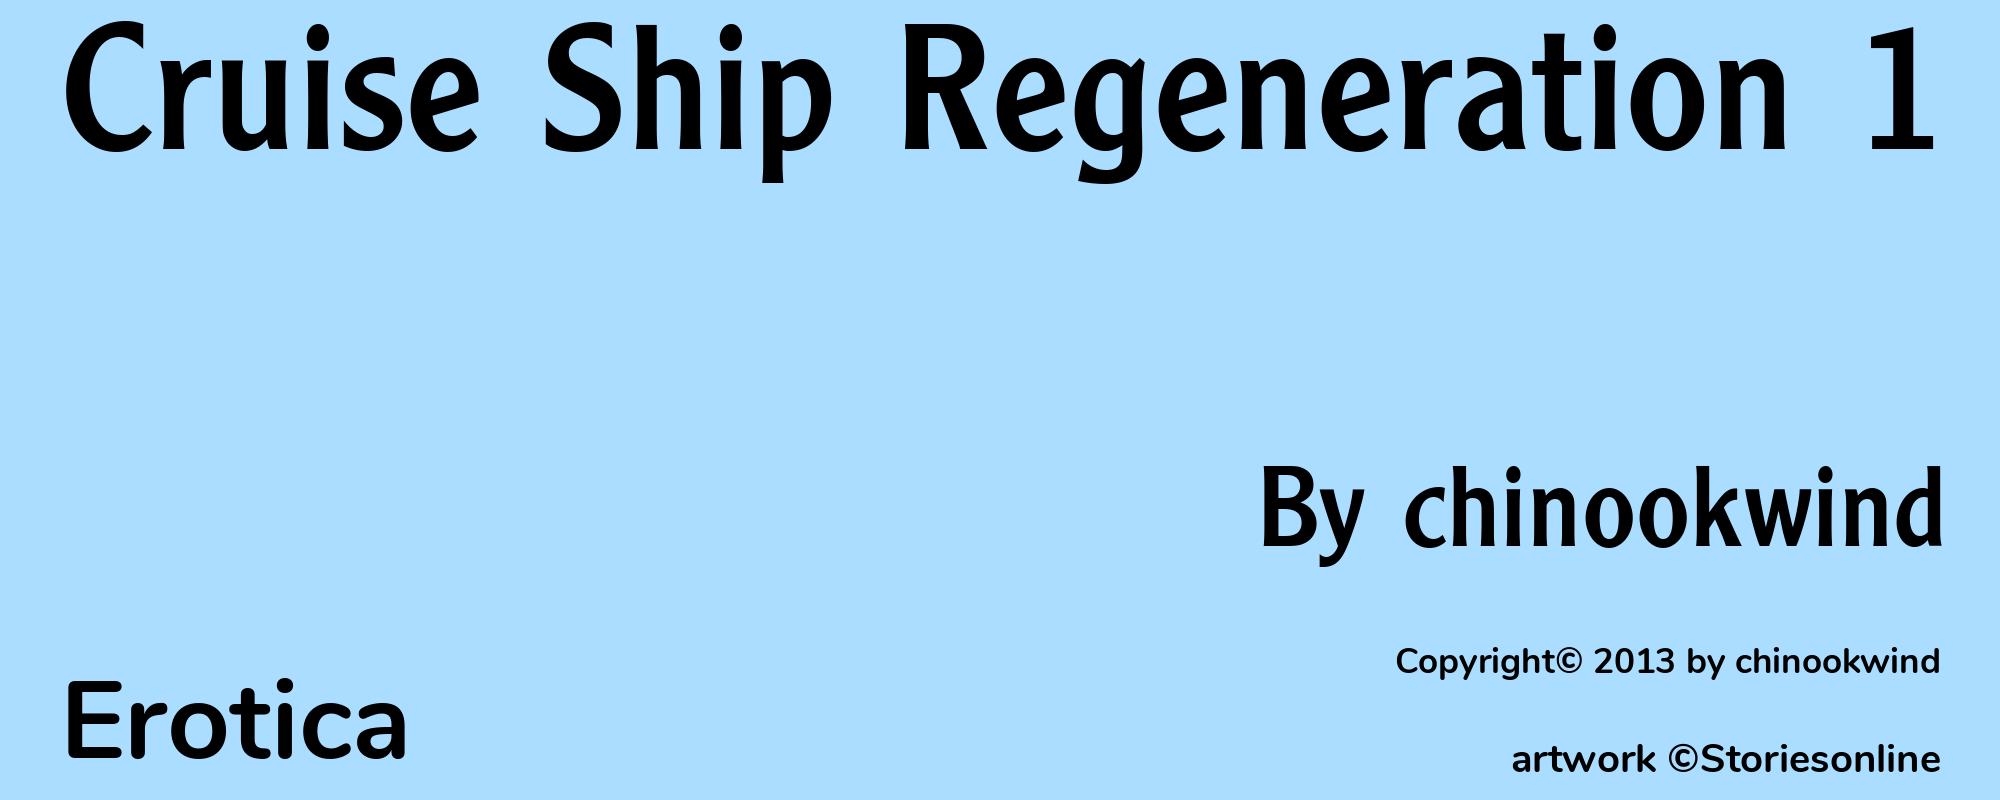 Cruise Ship Regeneration 1 - Cover